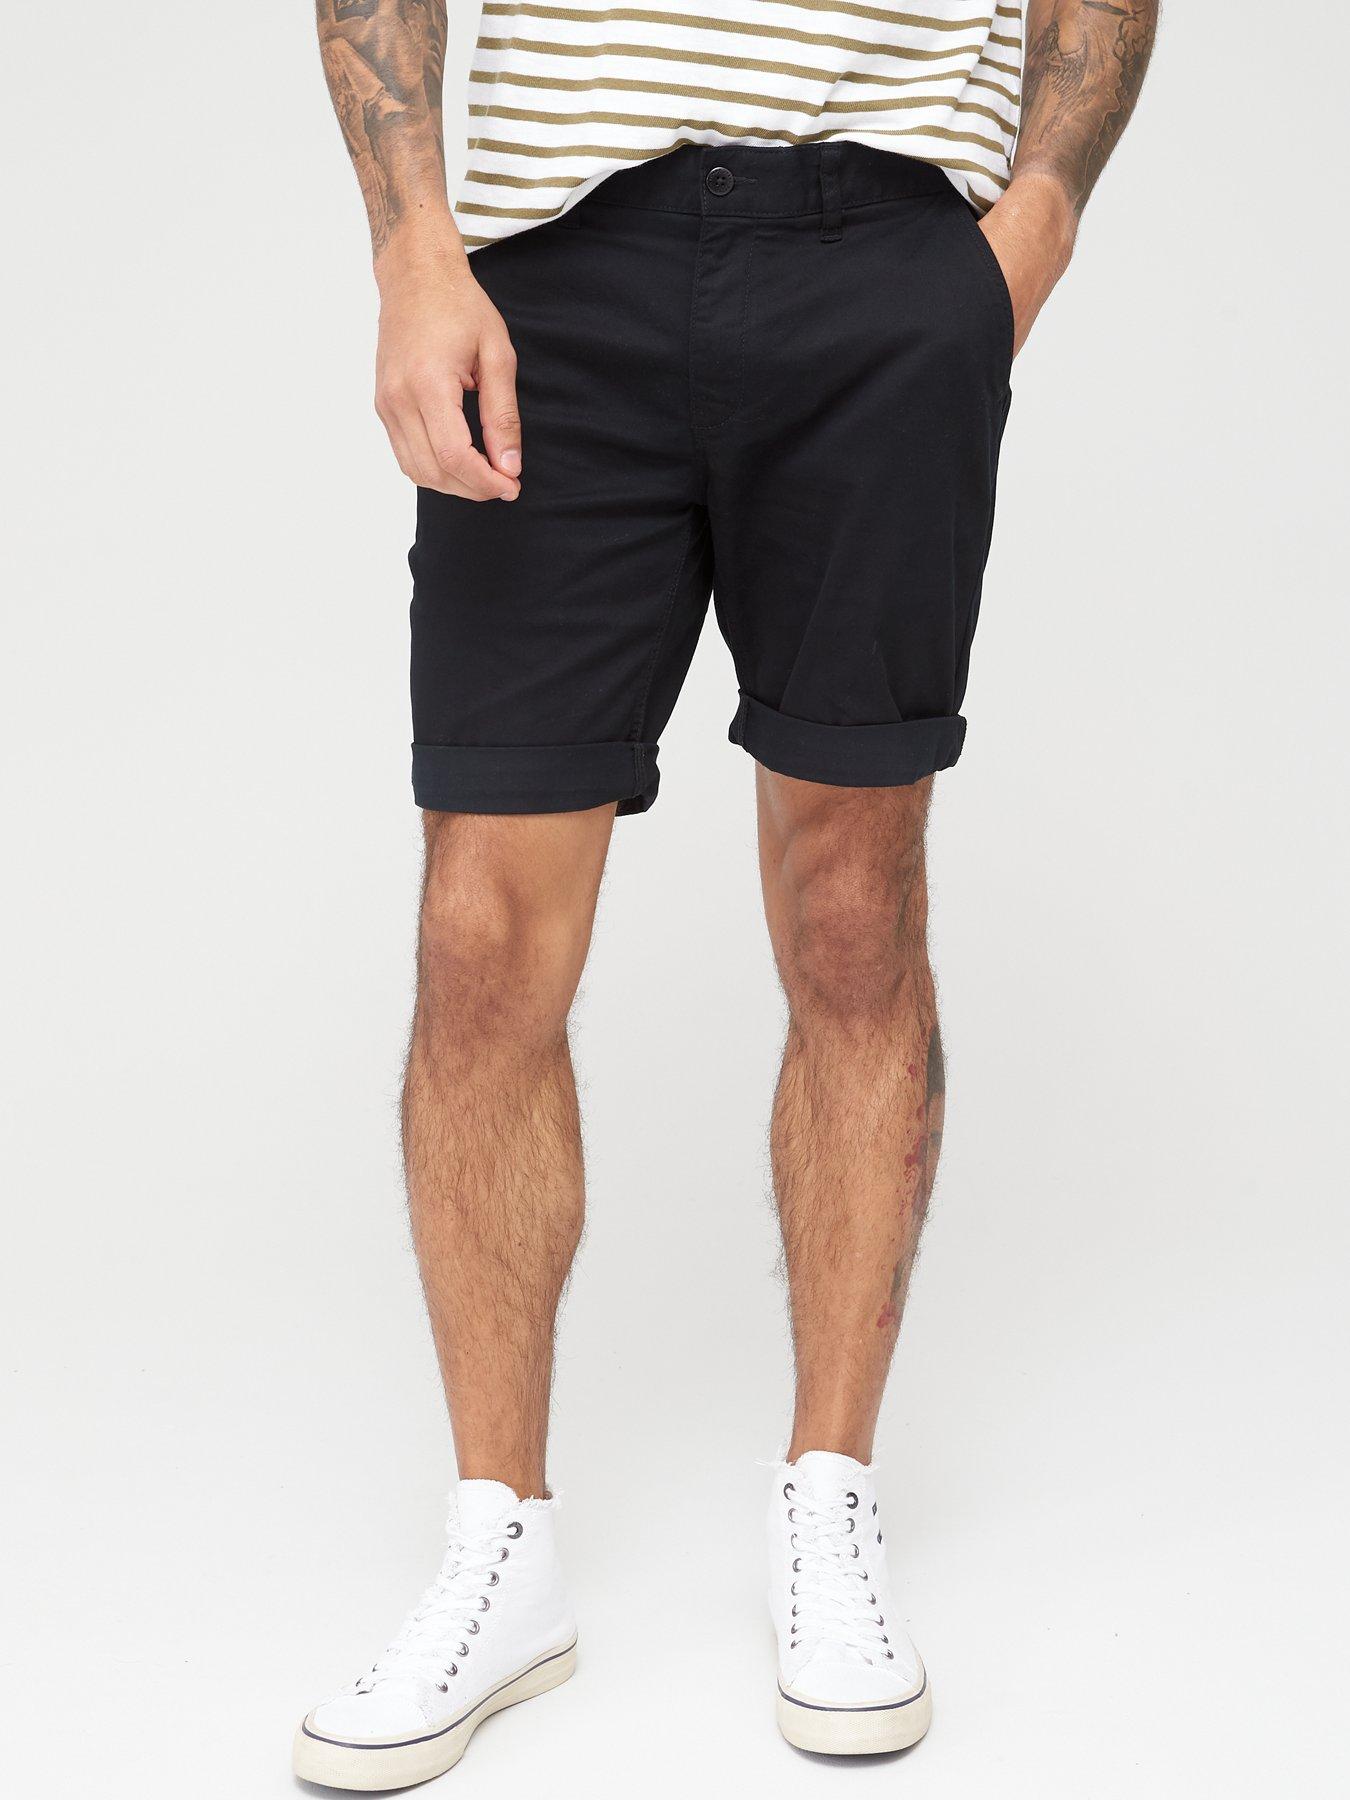 tommy hilfiger black shorts